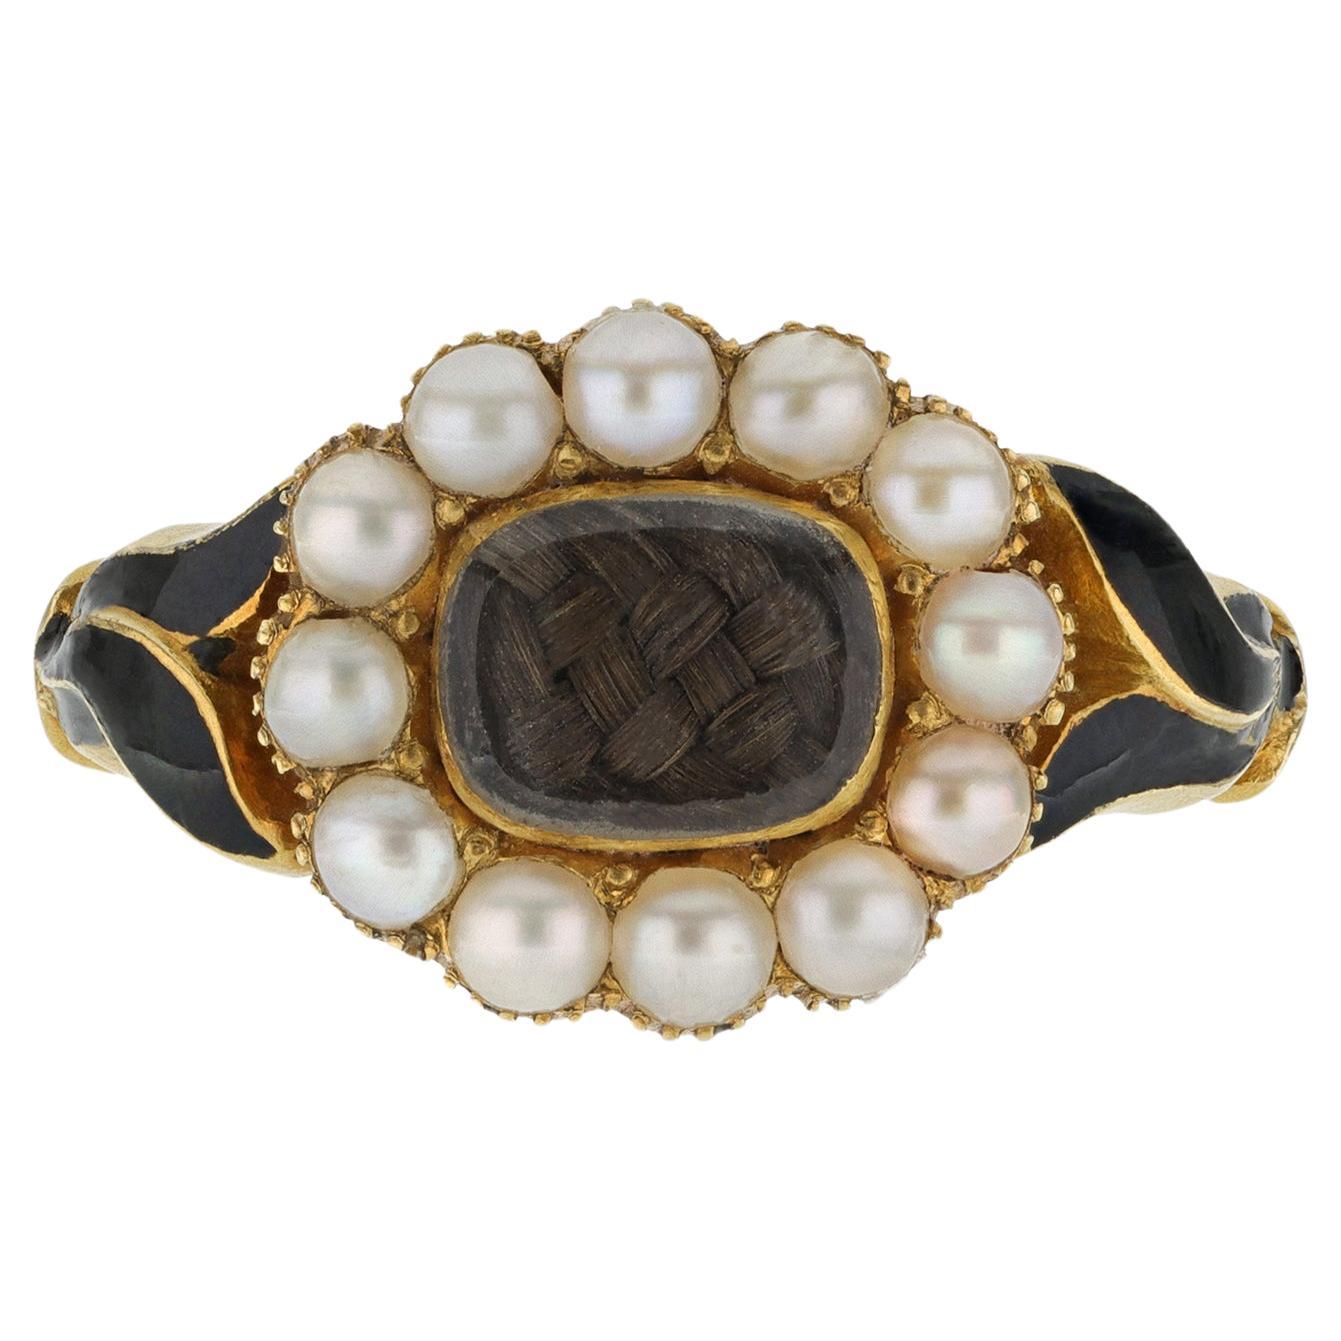 Pearl and black enamel memorial ring, English, 1854